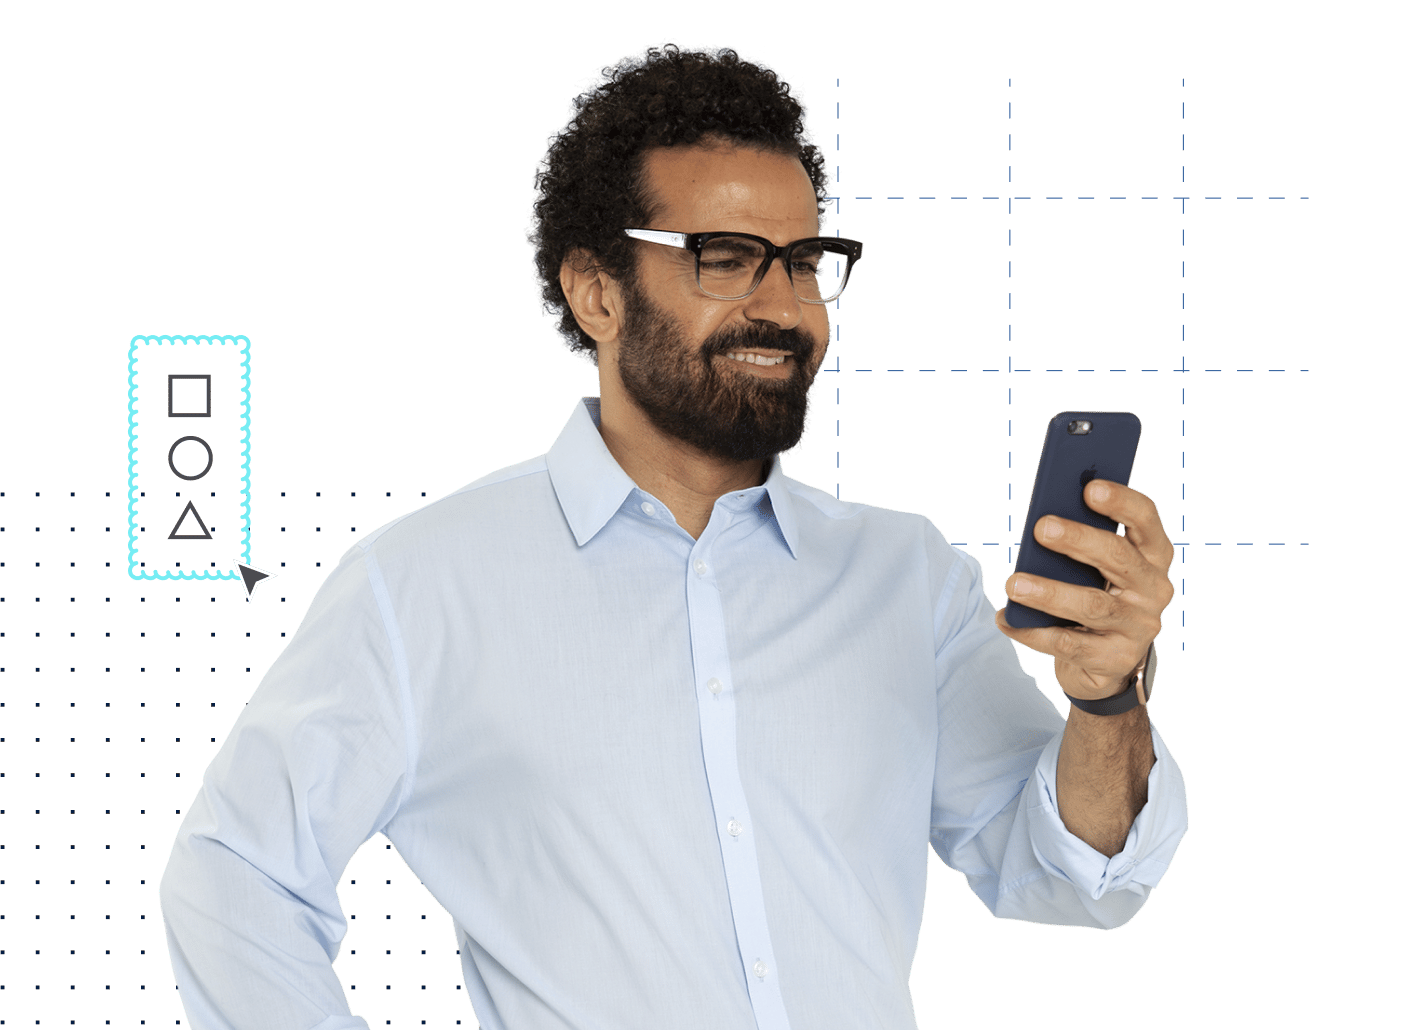 arquitecto con camisa abotonada con gafas mirando un dispositivo móvil